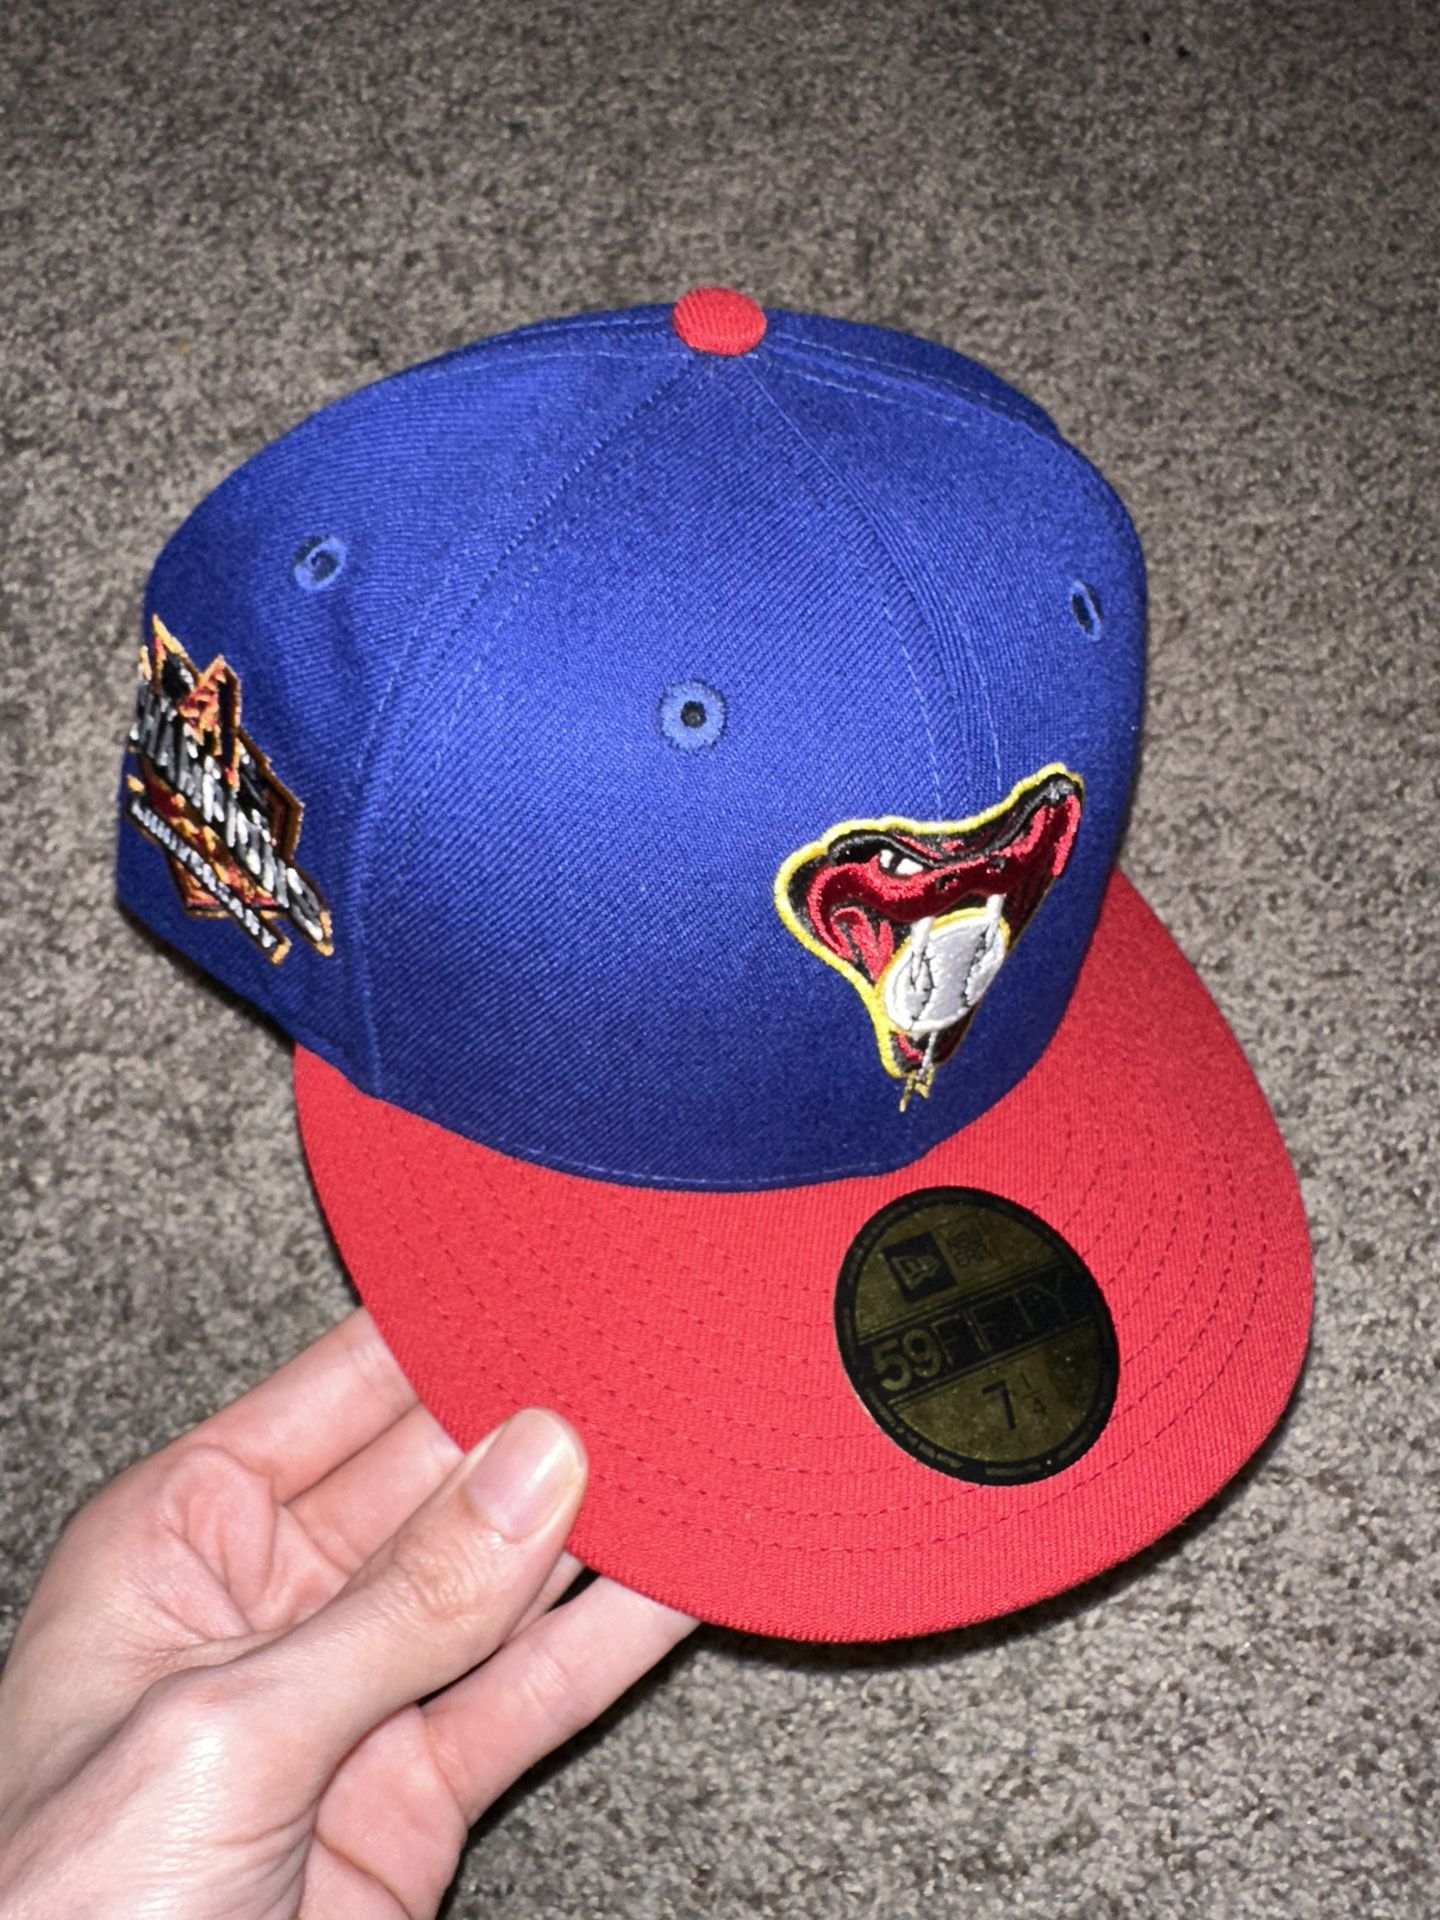 Hat Club Diamondbacks Cardinals Crossover Size 7 1/4